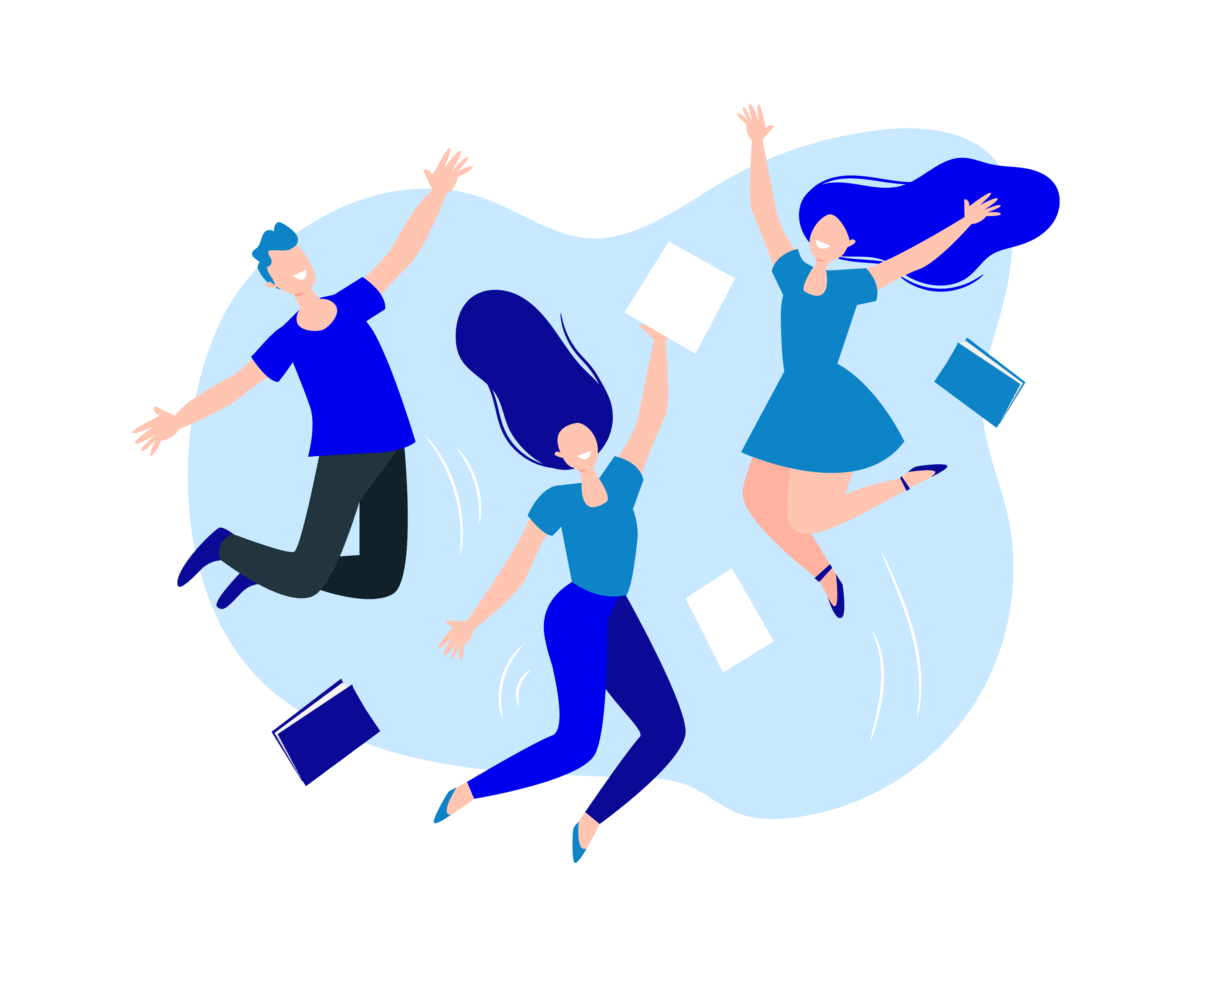 Illustration of people jumping joyfully